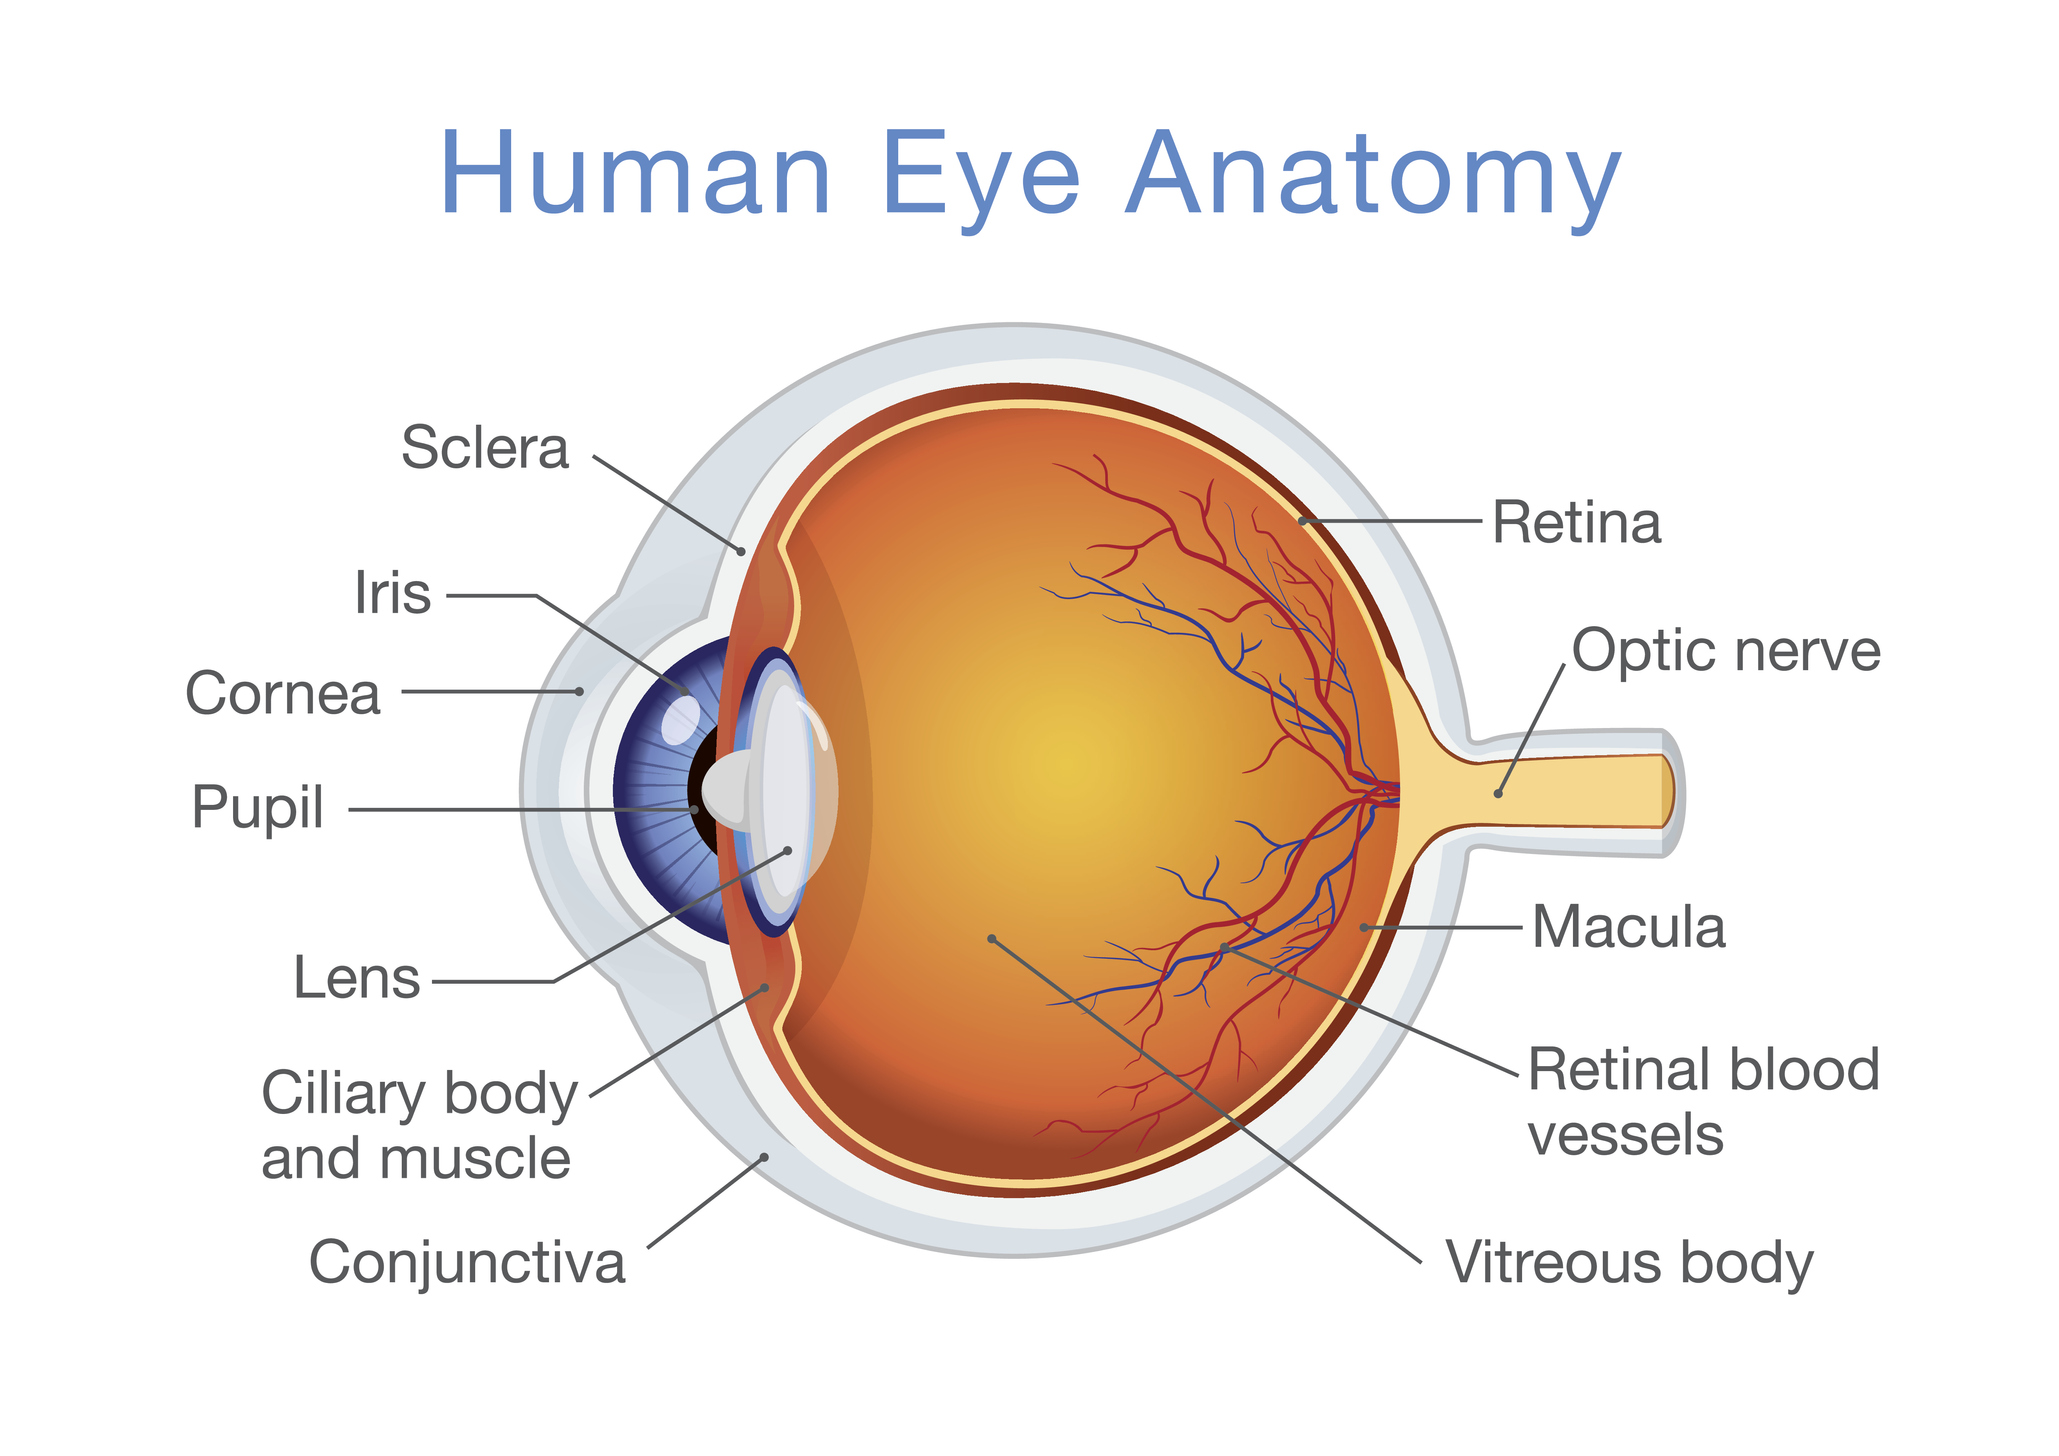 Anatomy of human eye and descriptions.